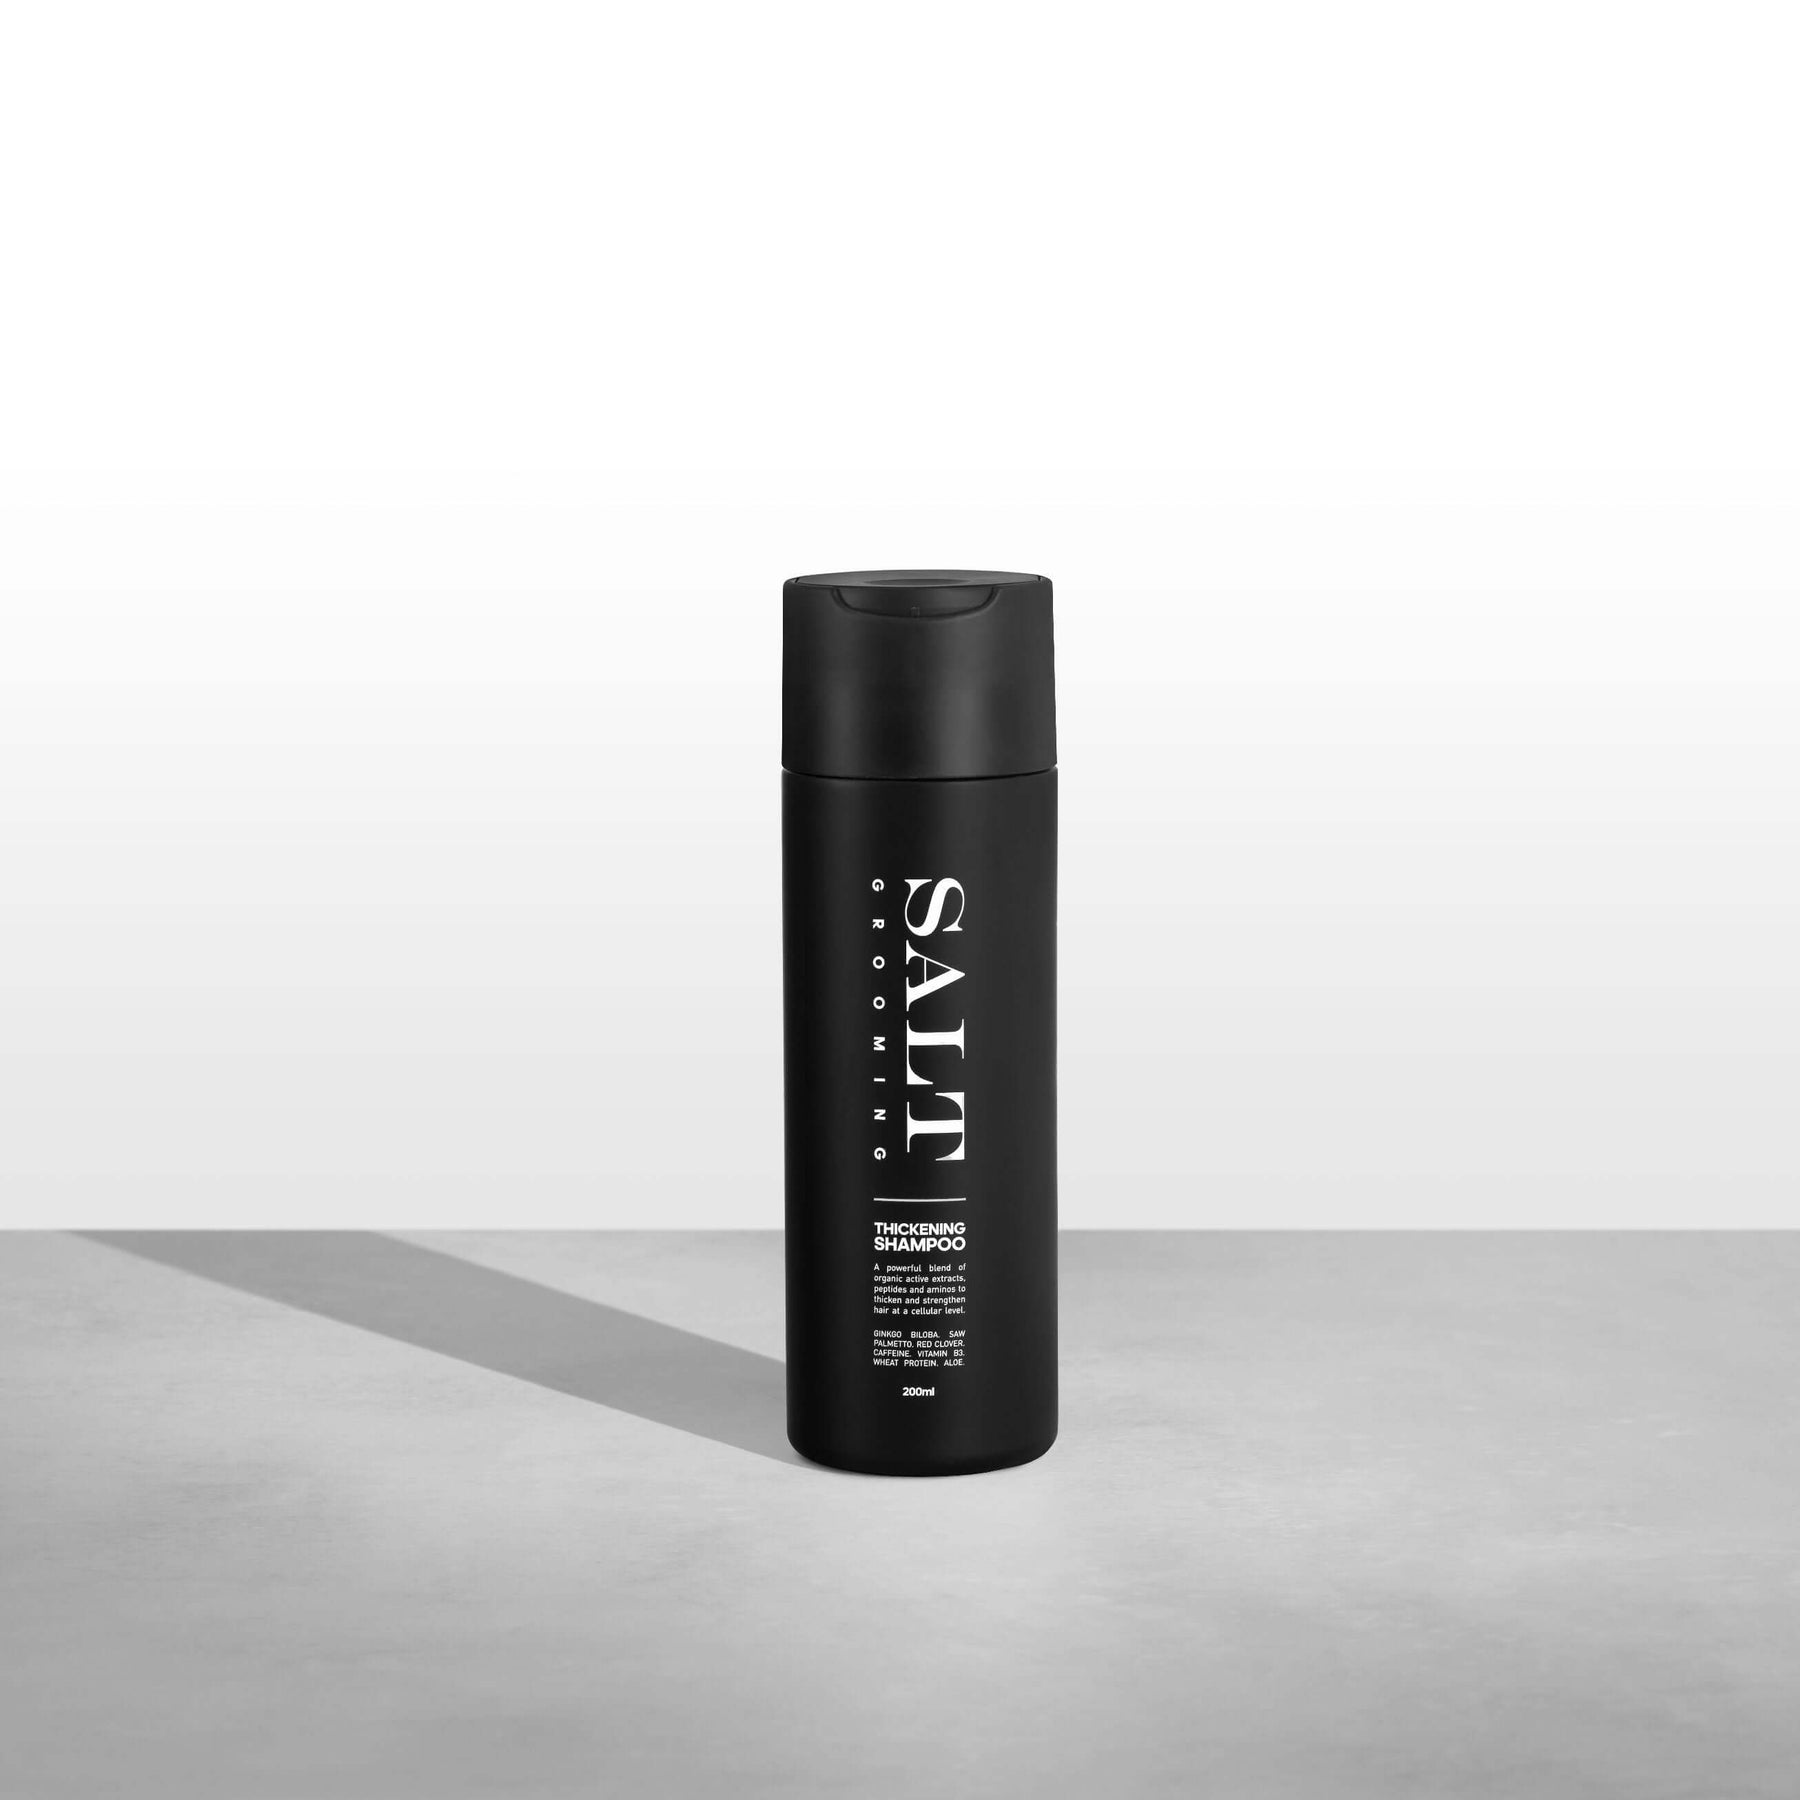 Salt Grooming - High quality hair thickening shampoo for men 200ml. Treats male hair loss